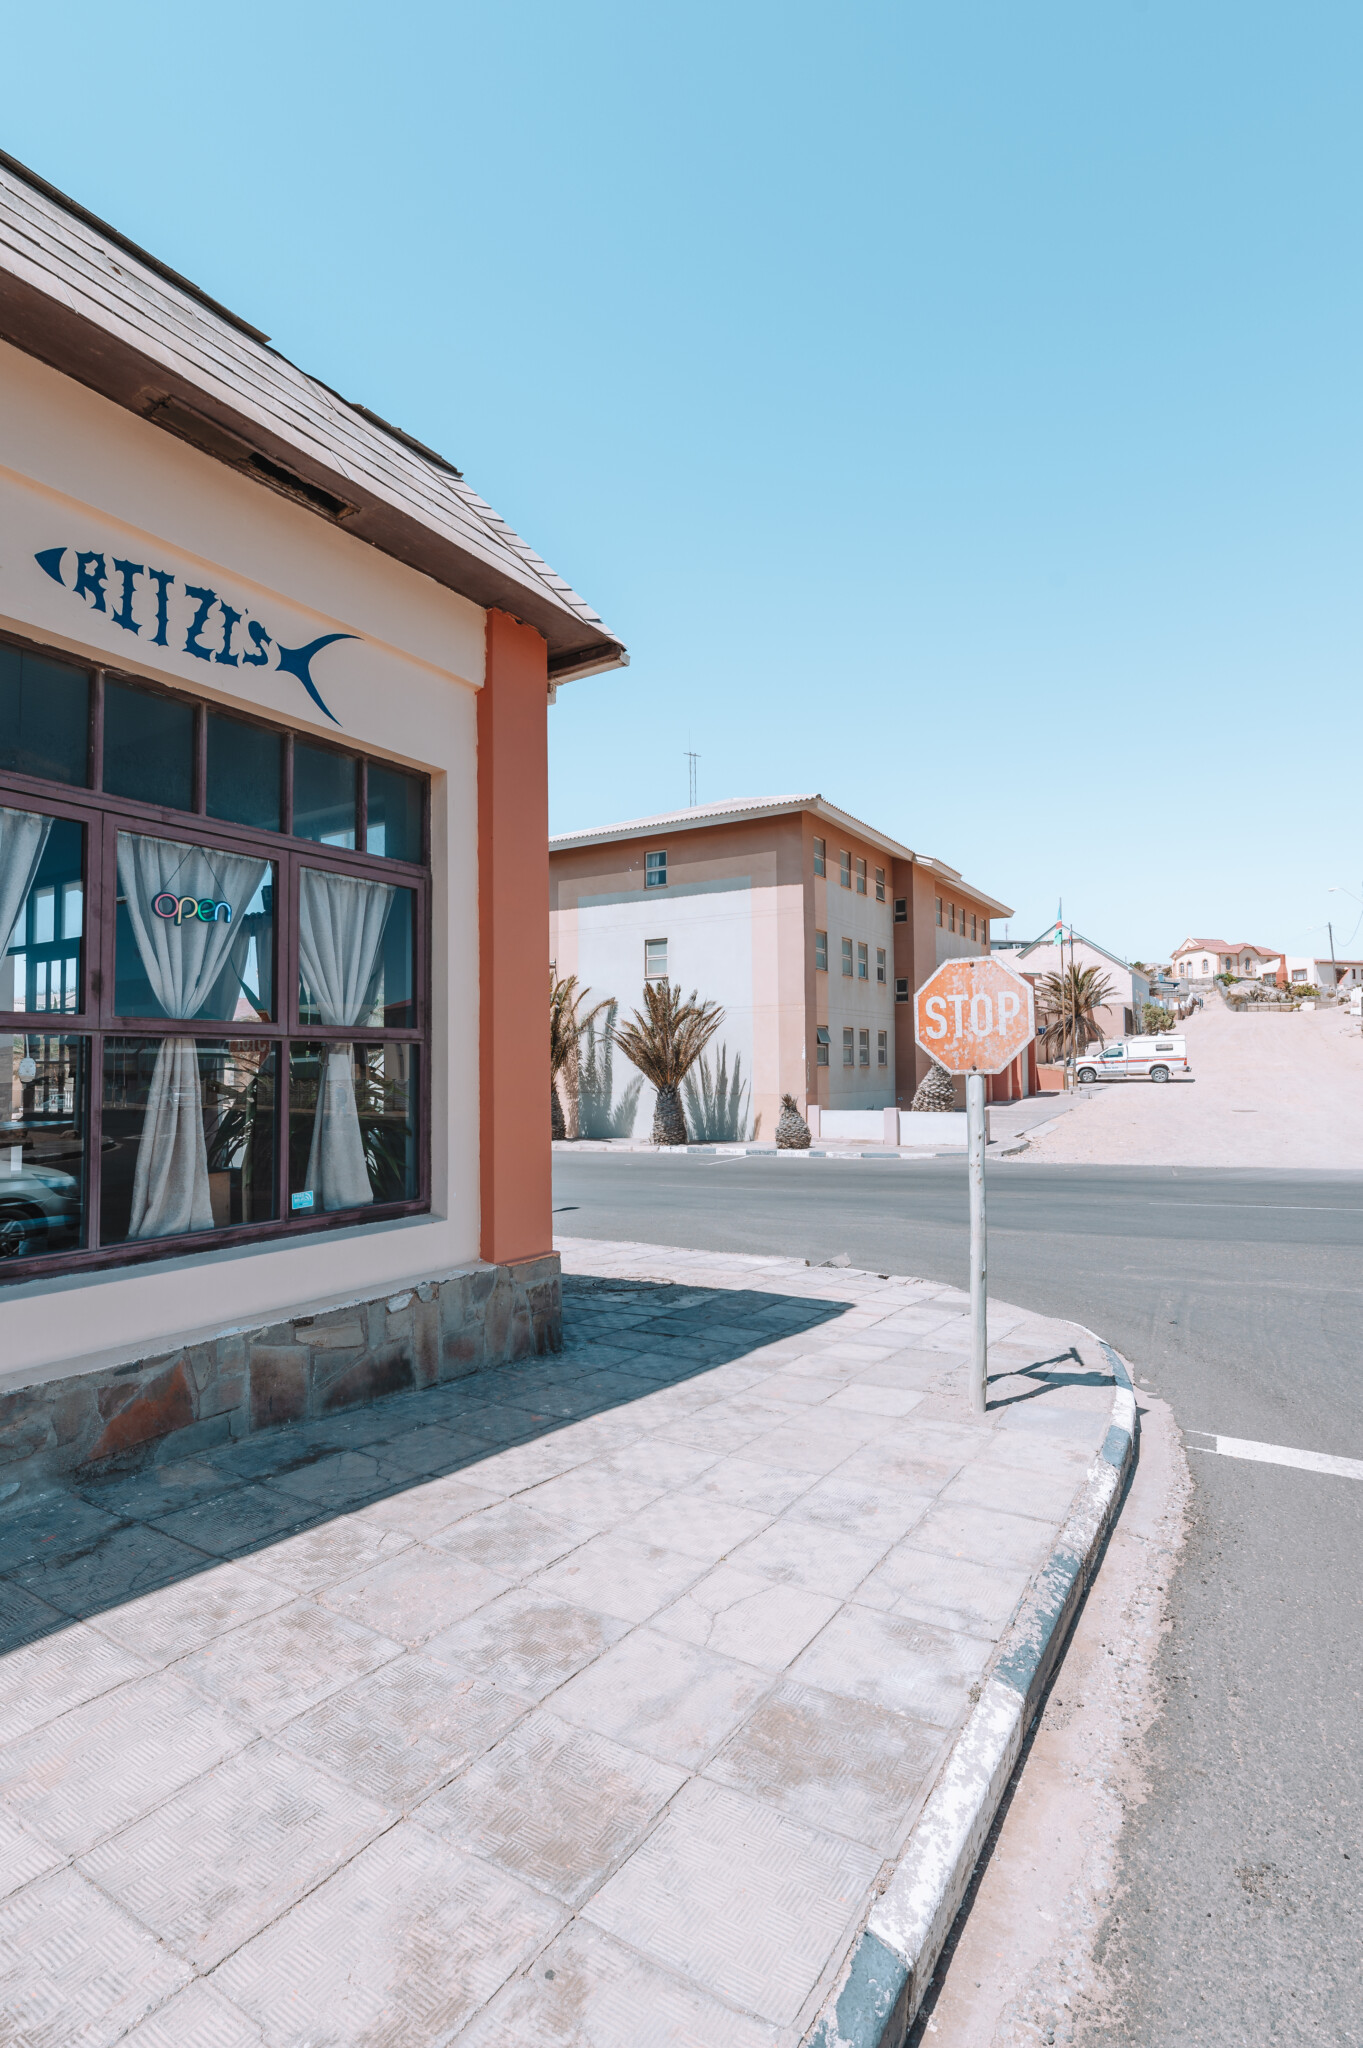 Ritzis Restaurant in Lüderitz